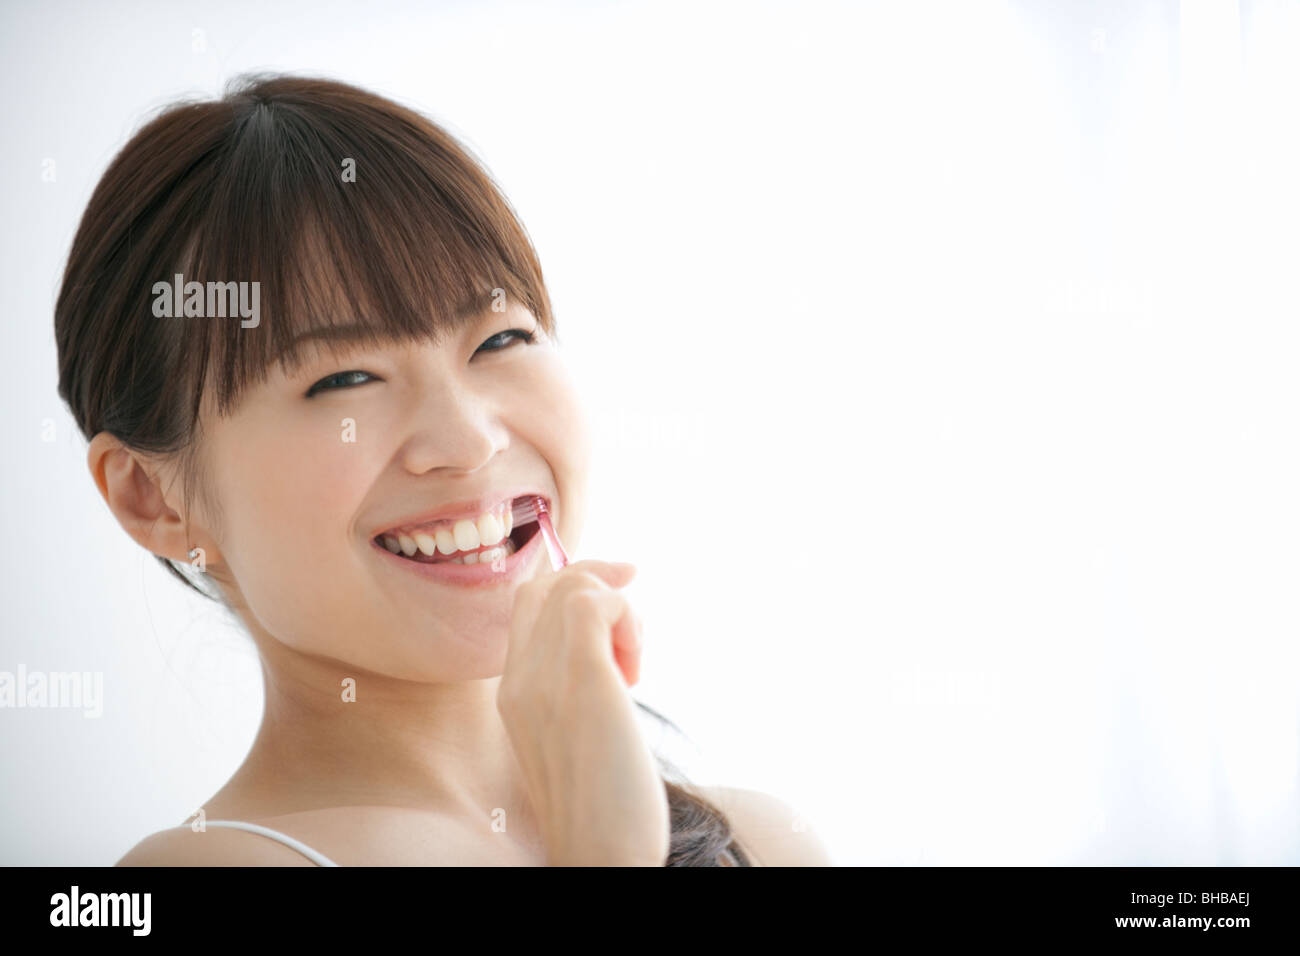 Japan, Osaka Prefecture, Woman brushing teeth, smiling, portrait Stock Photo